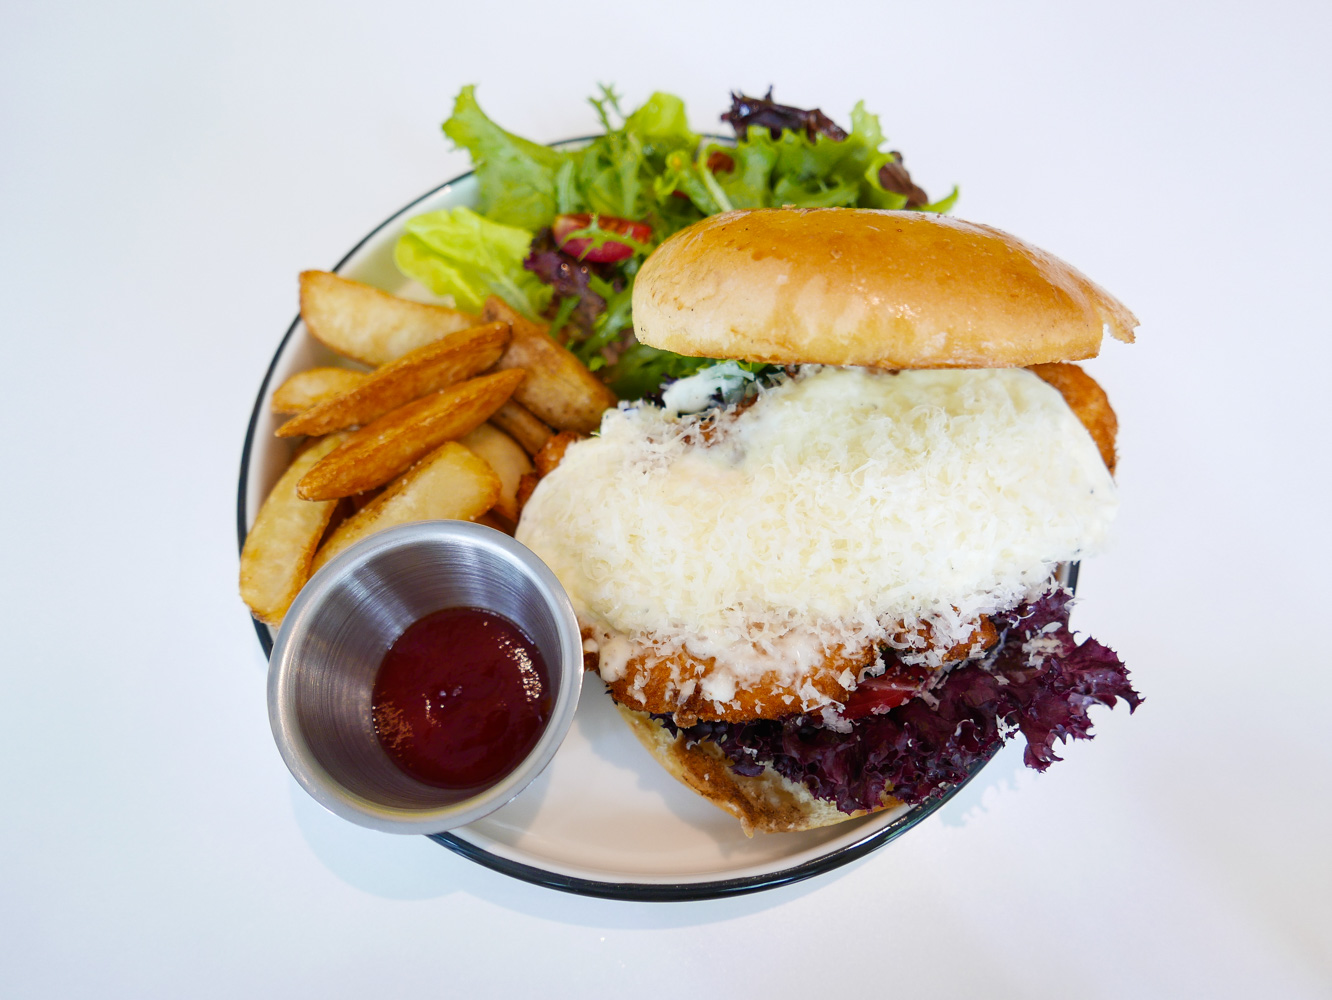 Sunnys-Burgerland-Restaurant-Review-Shanghai-4.jpg